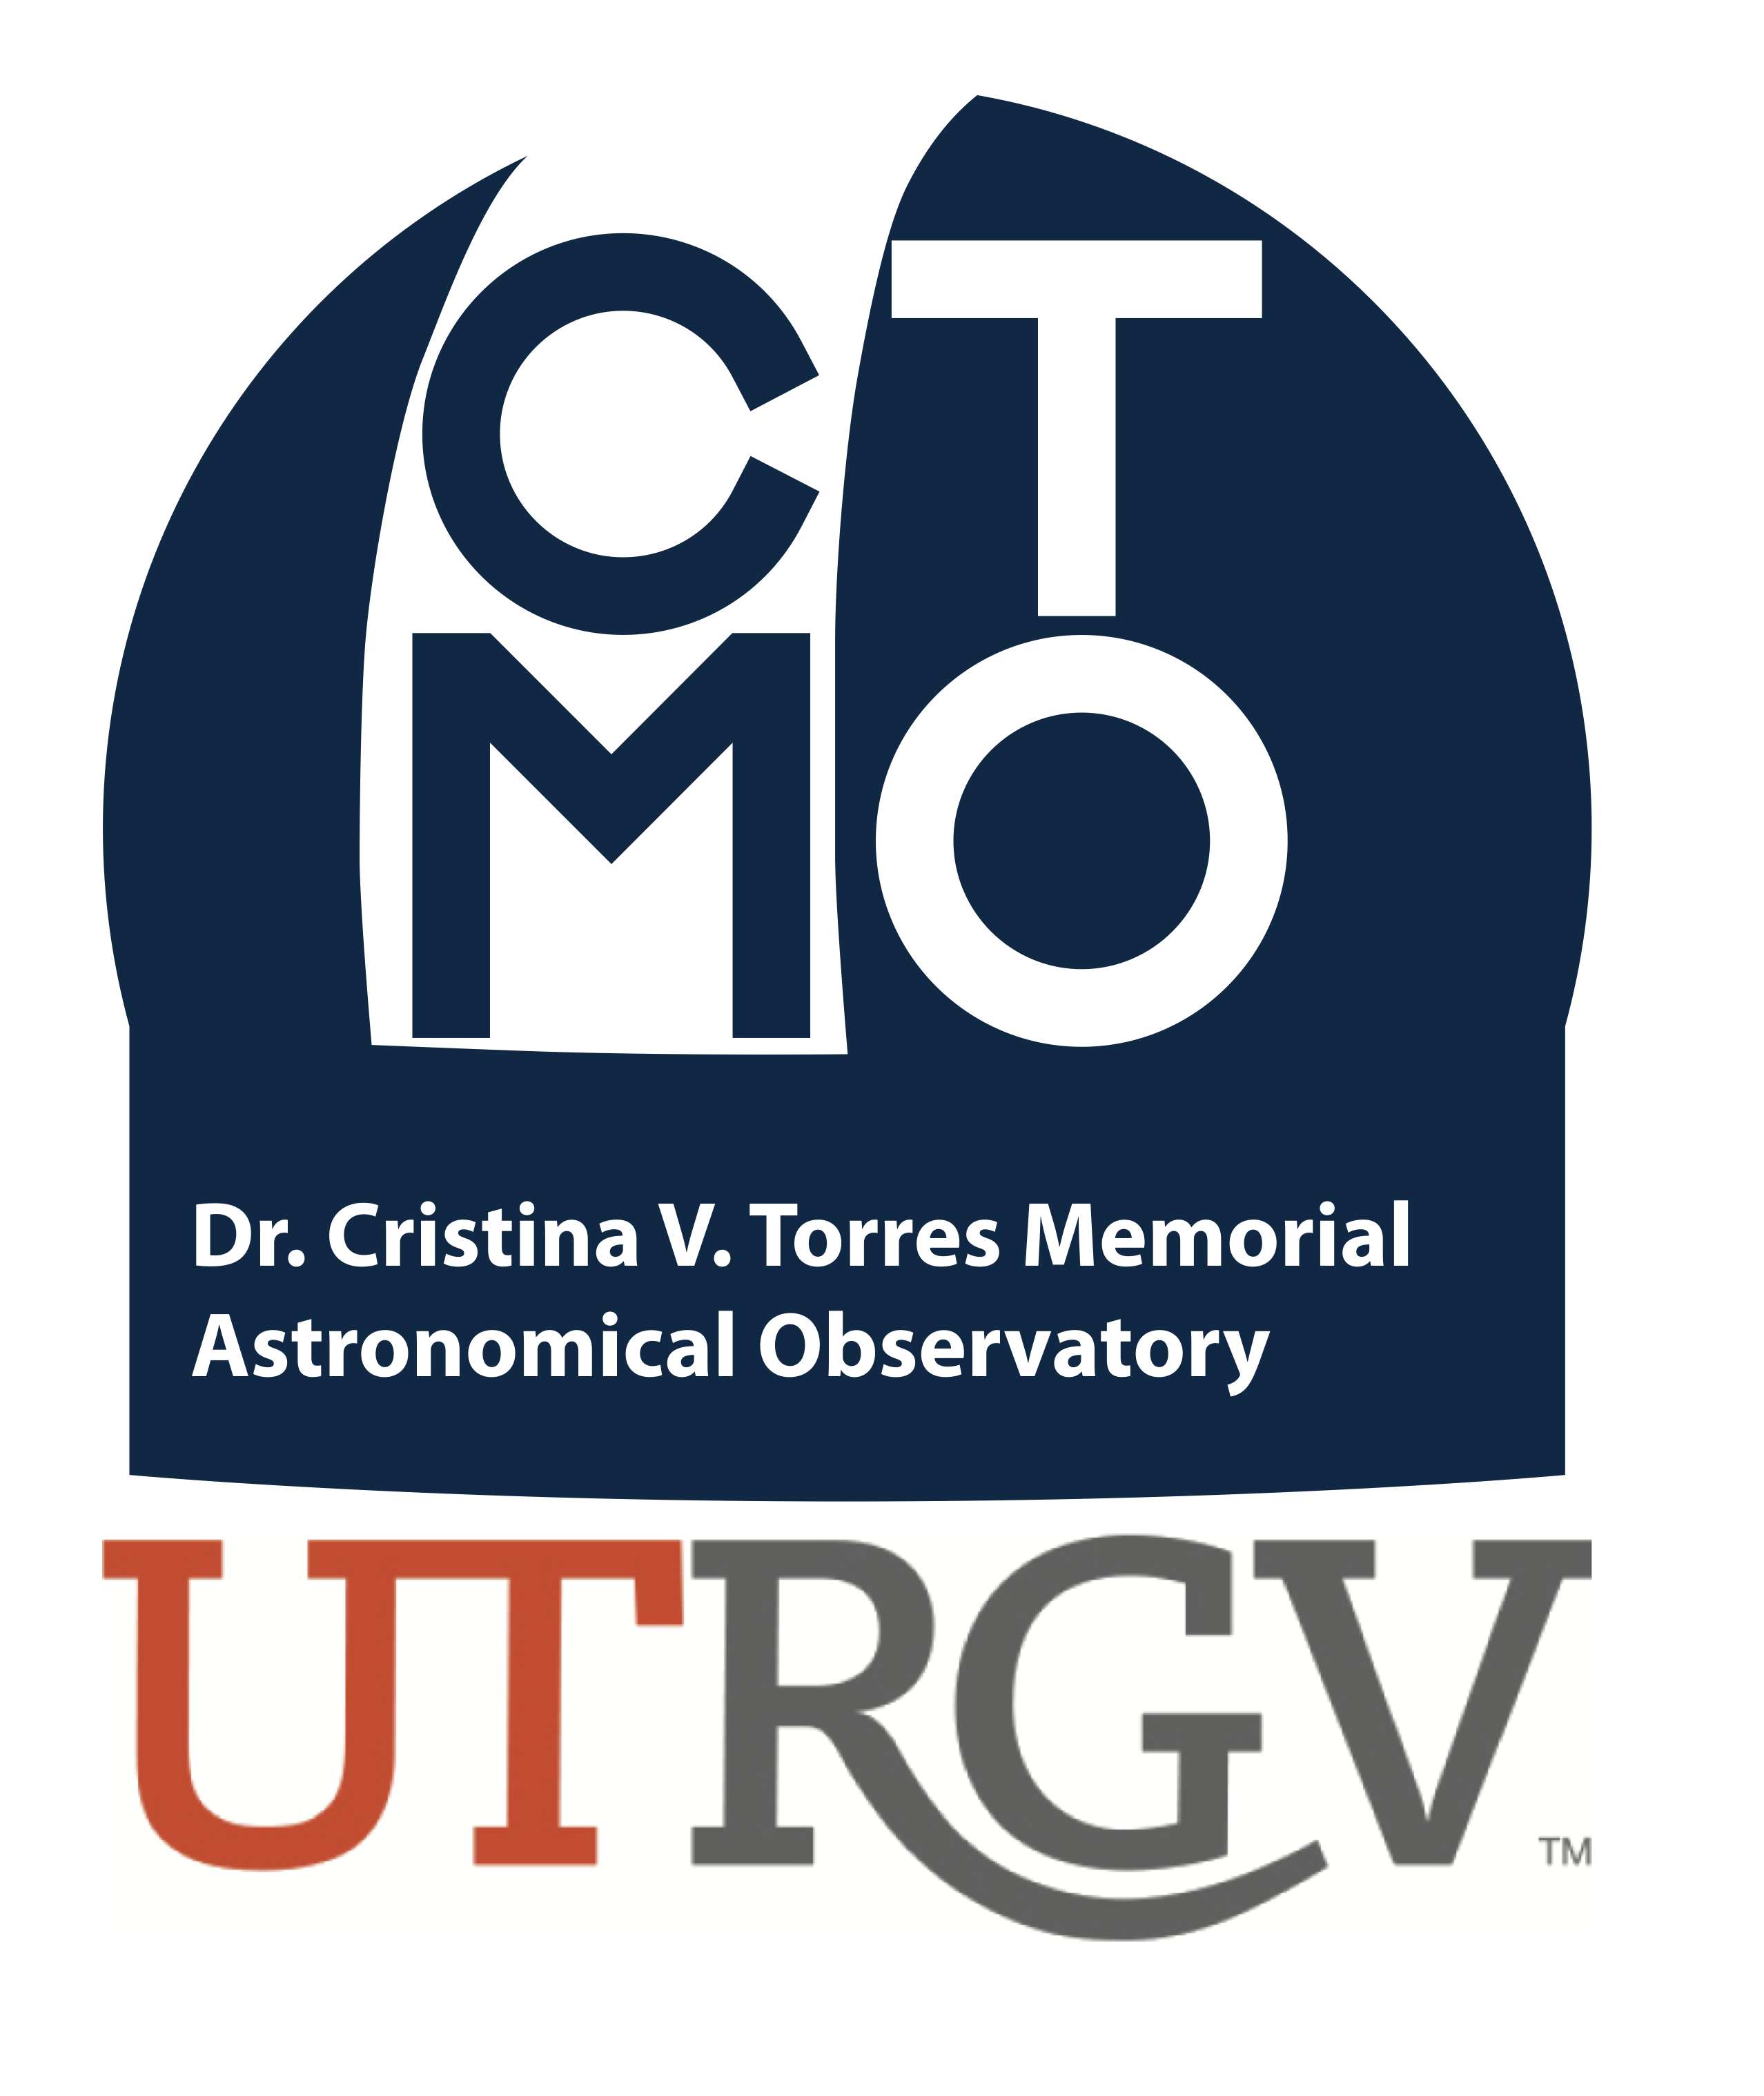 Dr. Cristina V. Torres Memorial Astronomical Observatory logo